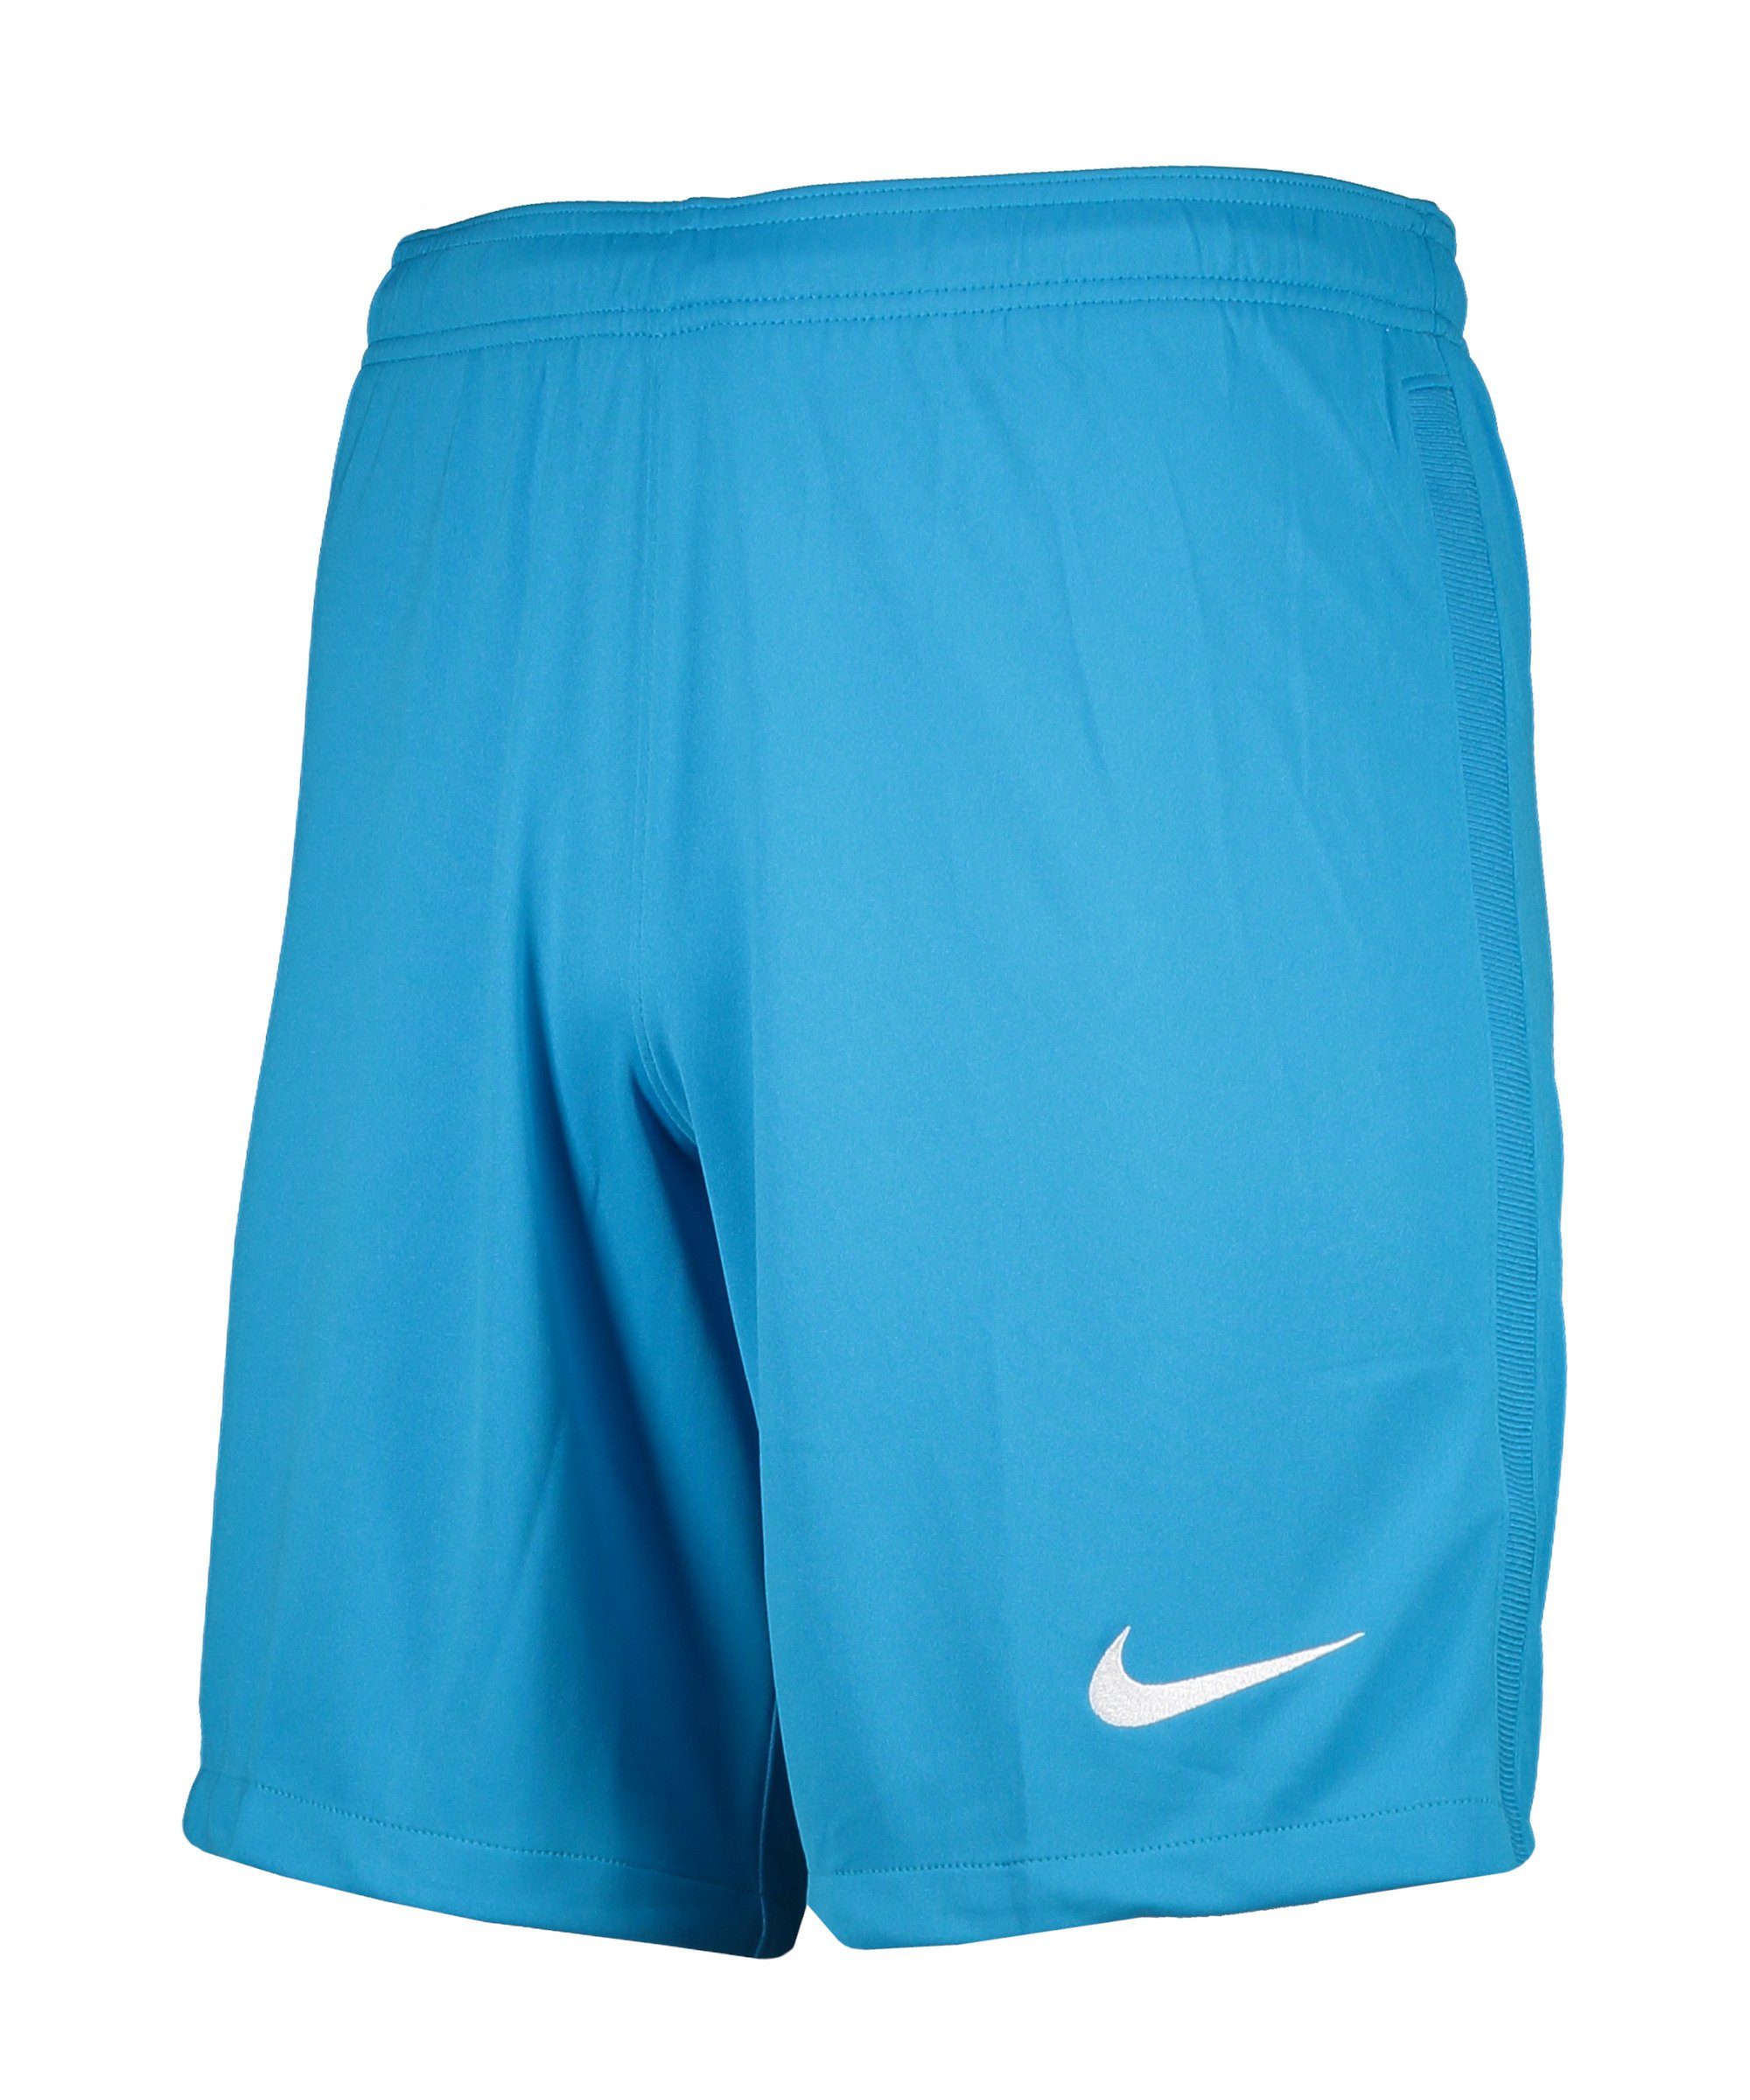 Nike Torwarthose Park Torwart Short blauweiss